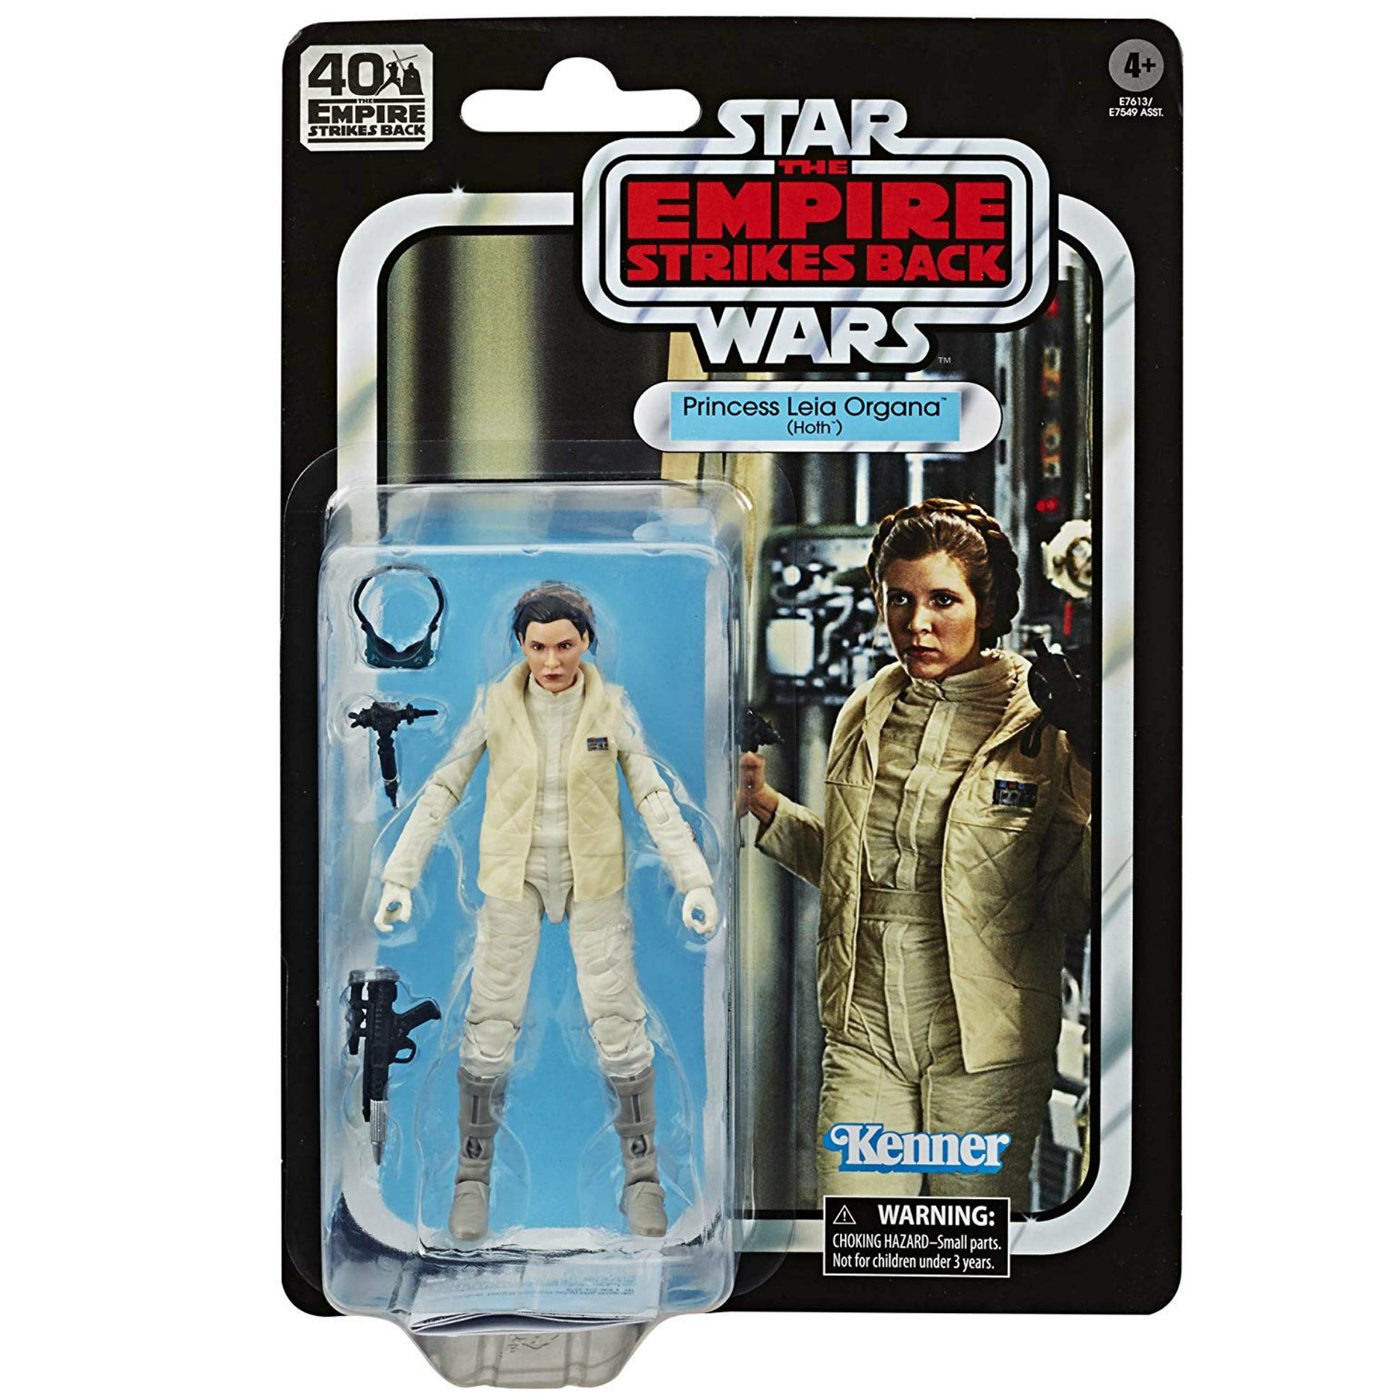 Star Wars 40th Anniversary Empire Strikes Back Black Series Princess Leia Hoth-1